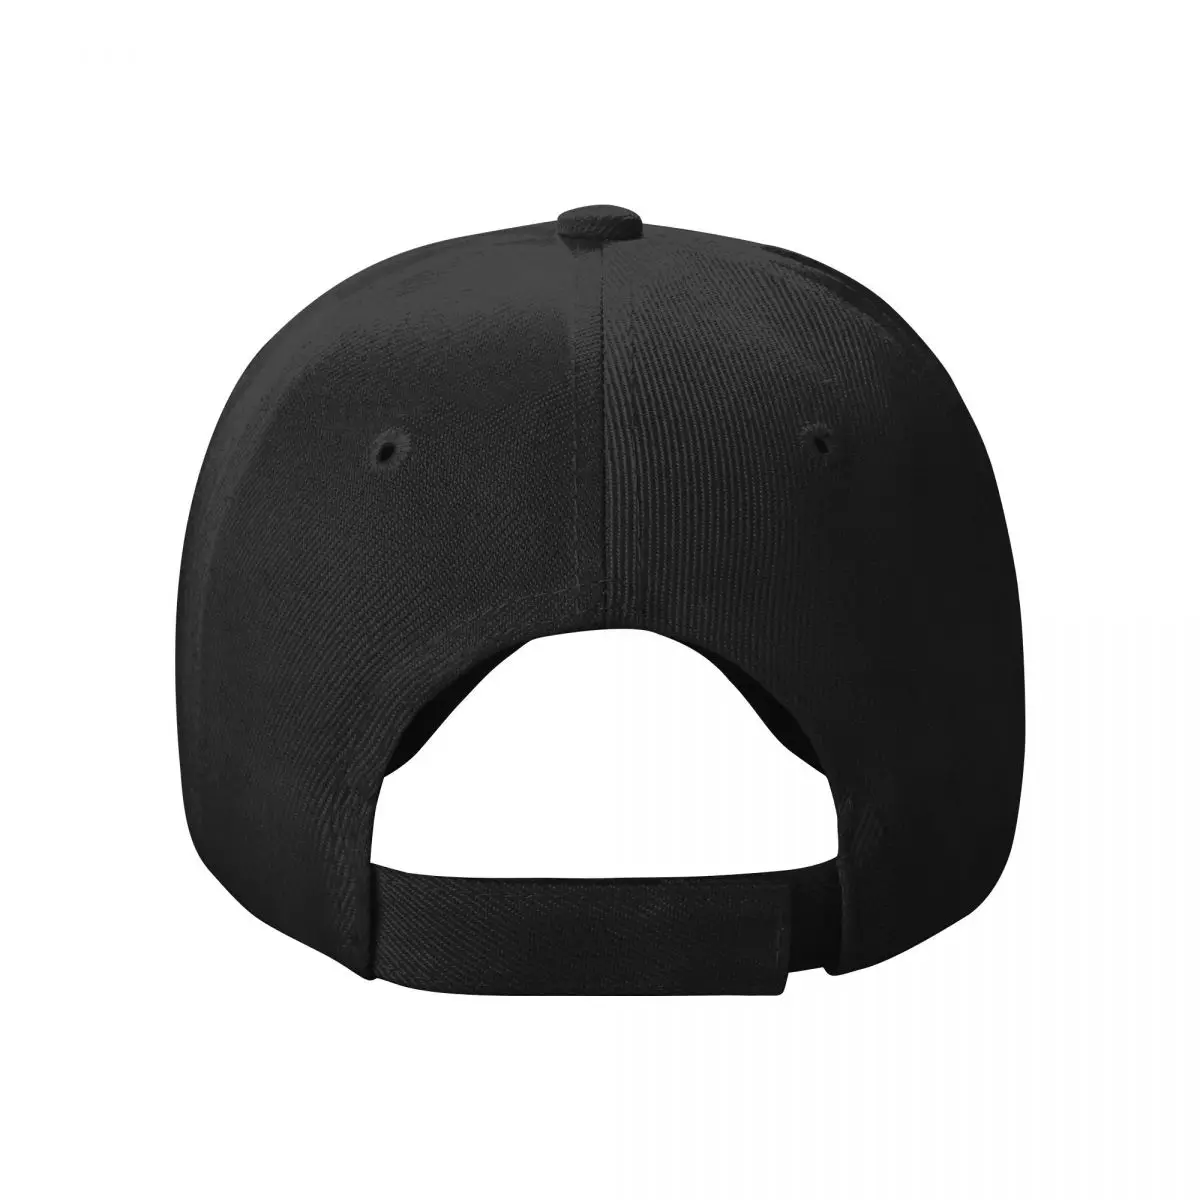 Бестселлер - Товарная кепка Jack in The Box, бейсбольная кепка, рыболовная шляпа, шляпа для женщин, мужская кепка 3